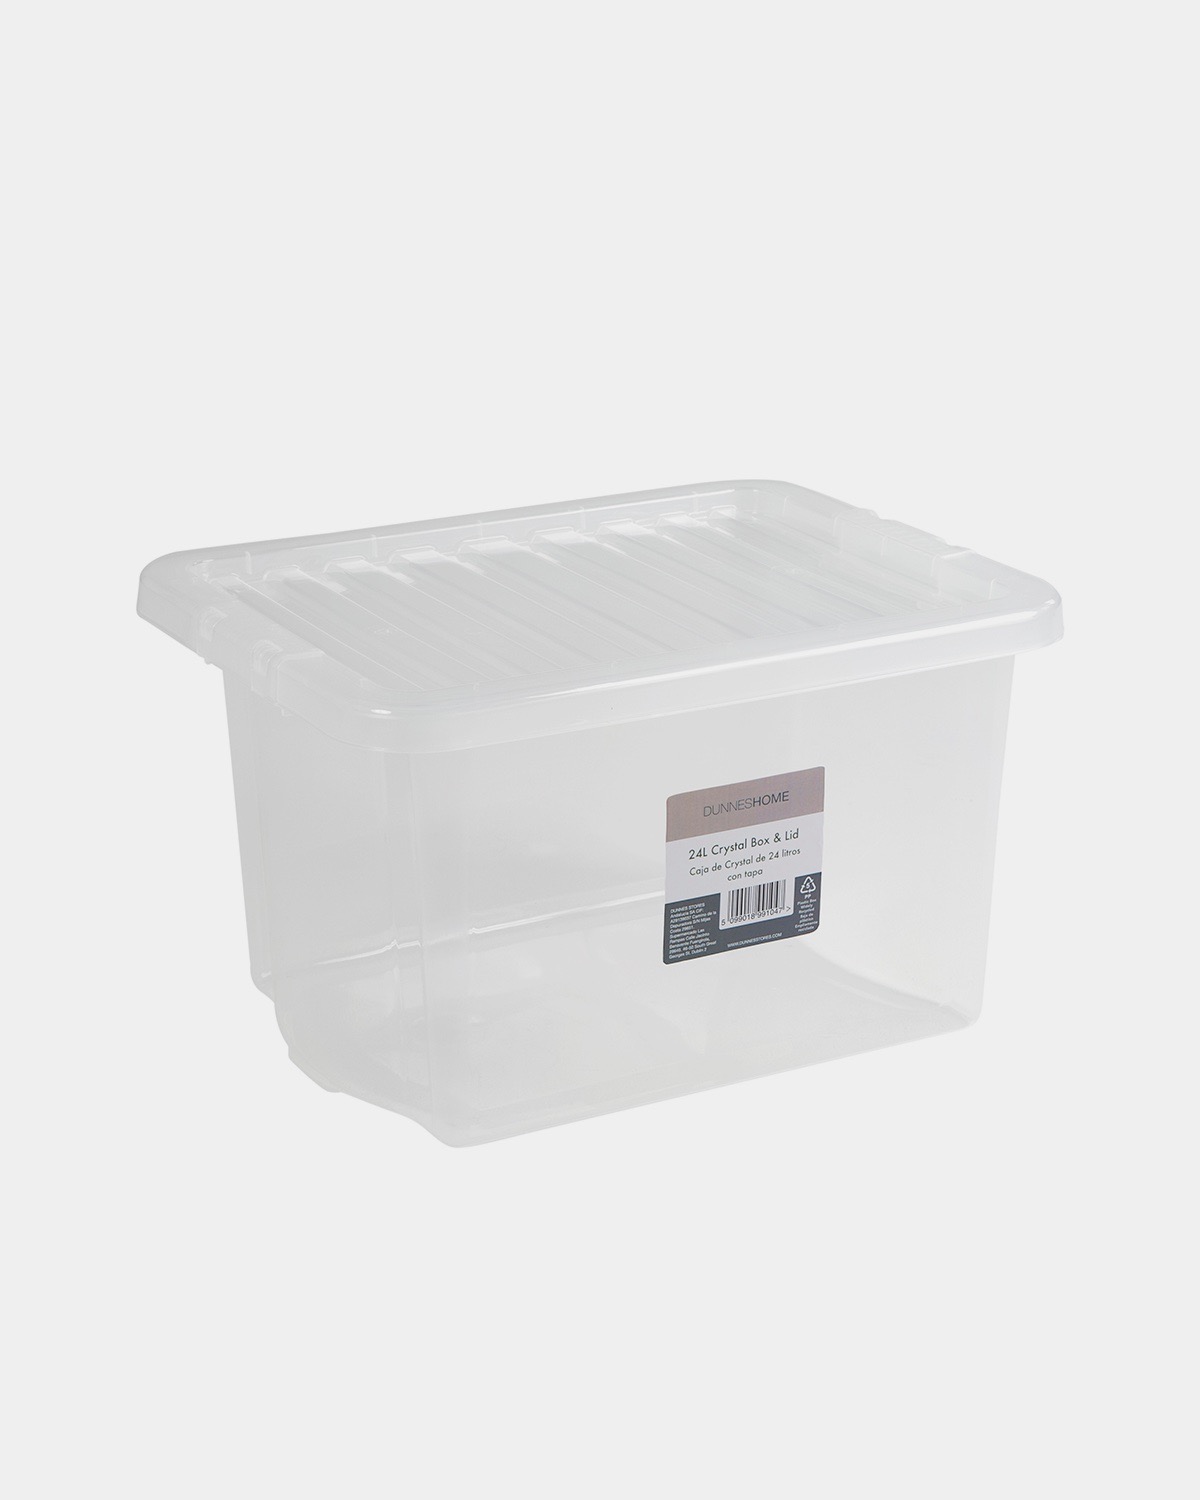 Crystal 80L Clear Storage Box & Lid